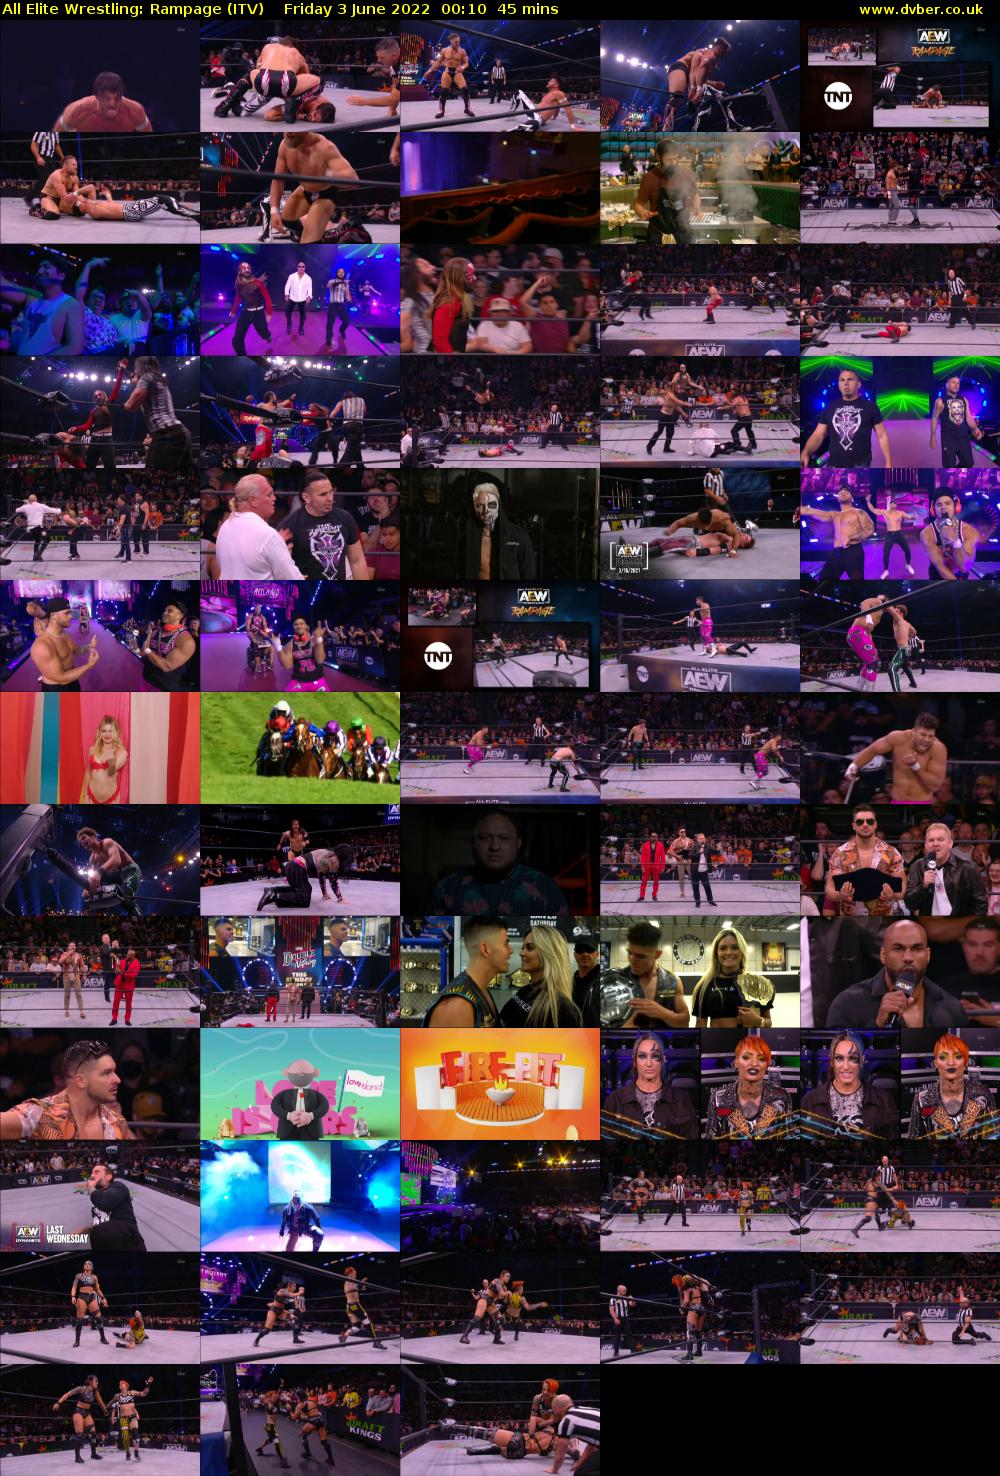 All Elite Wrestling: Rampage (ITV) Friday 3 June 2022 00:10 - 00:55